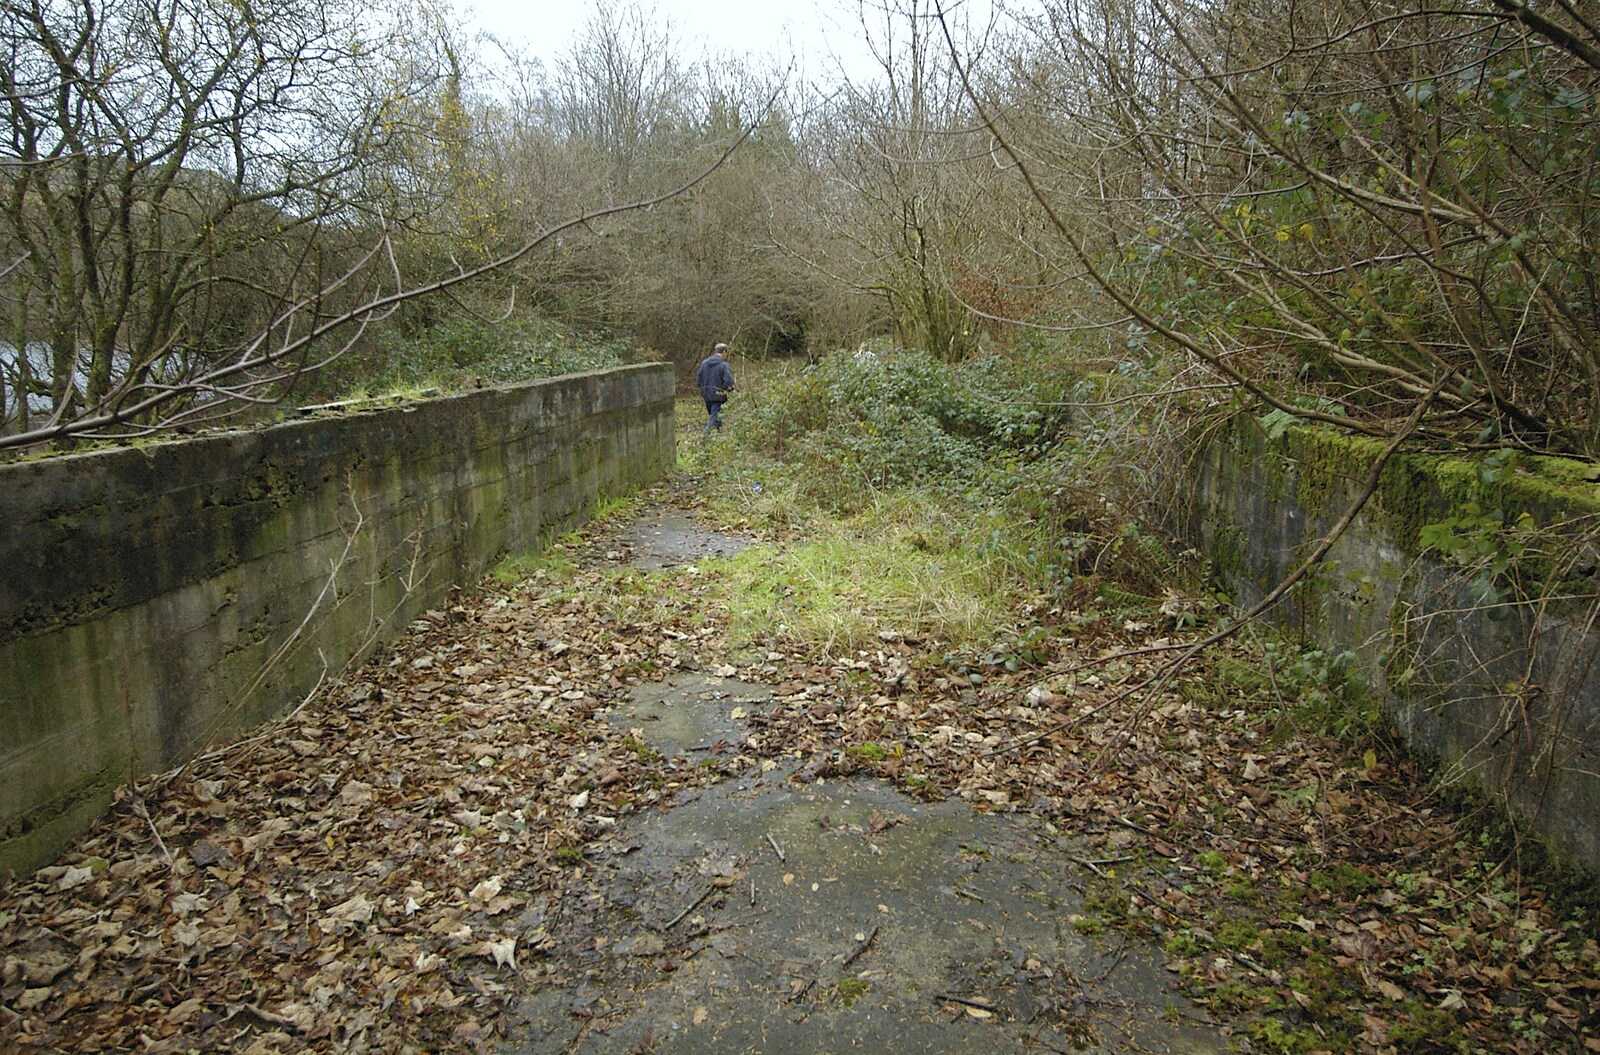 Some more derelict infrastructure from A Wander Around Hoo Meavy and Burrator, Dartmoor, Devon - 18th December 2005